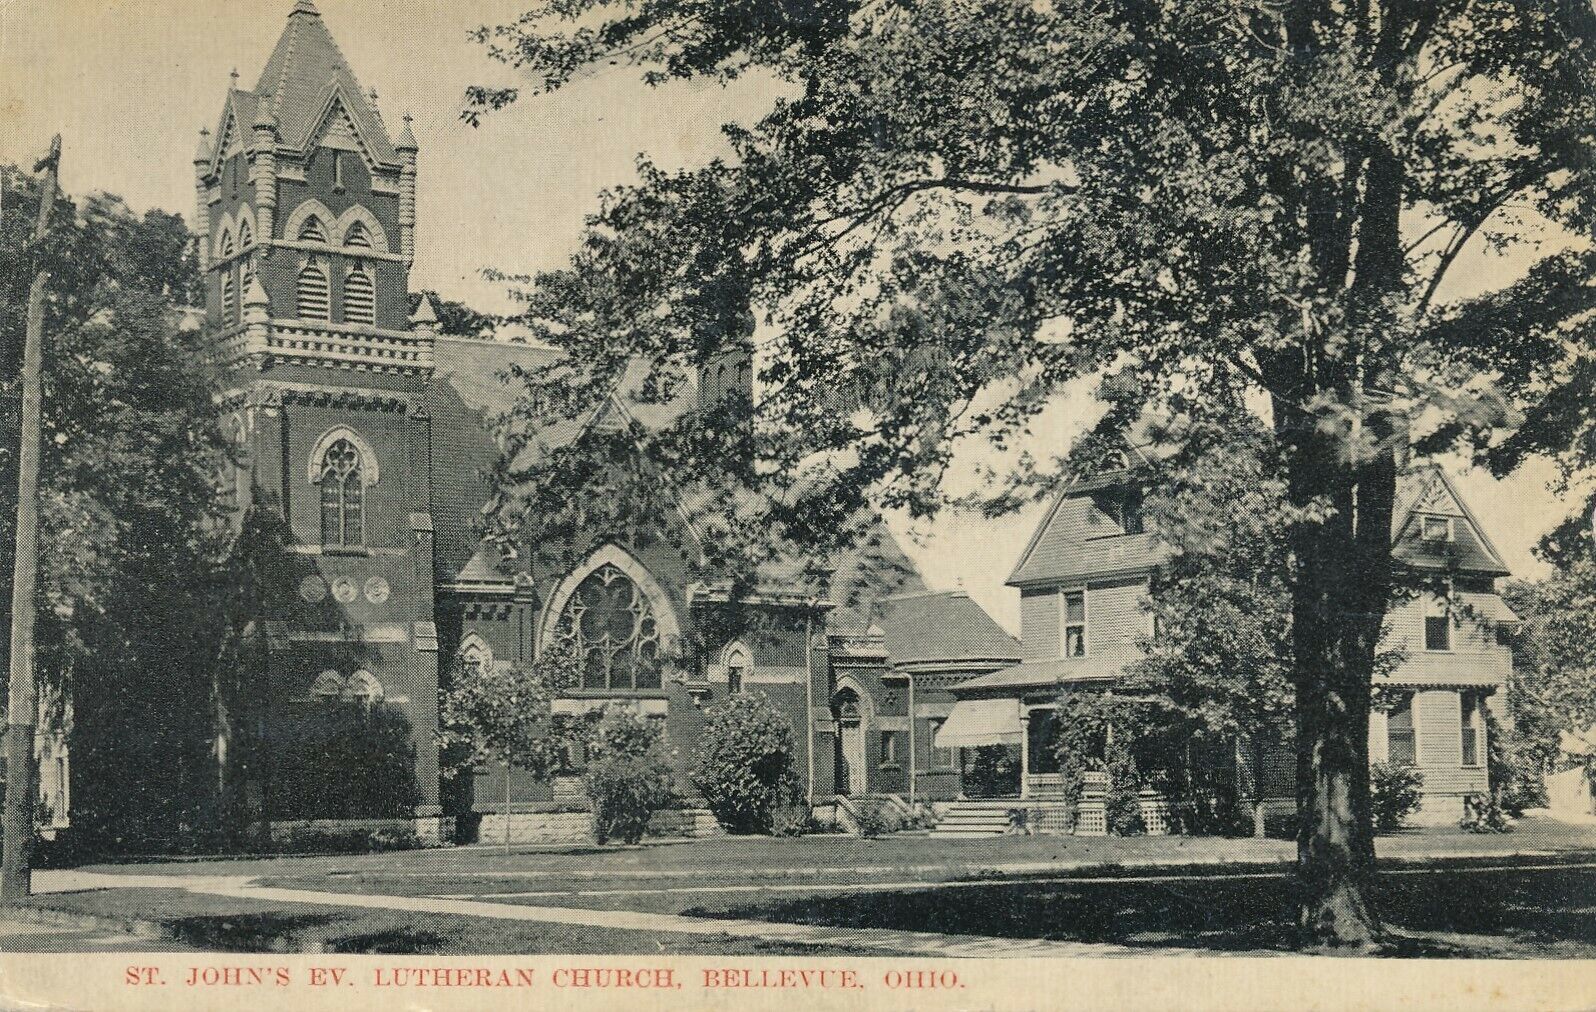 BELLEVUE OH – St. John’s Evangelical Lutheran Church - 1922